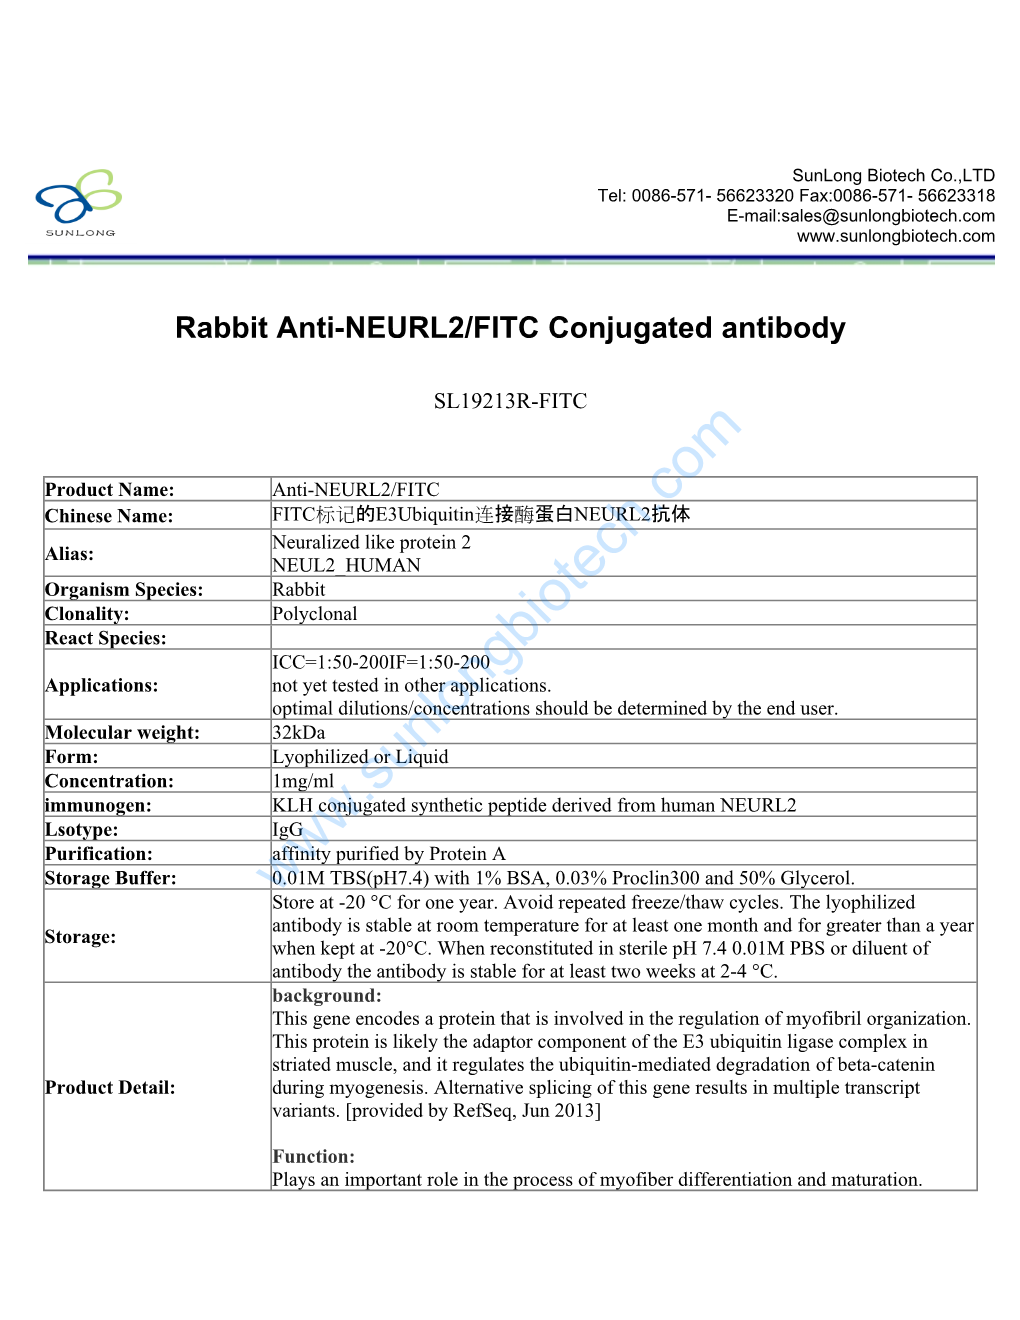 Rabbit Anti-NEURL2/FITC Conjugated Antibody-SL19213R-FITC